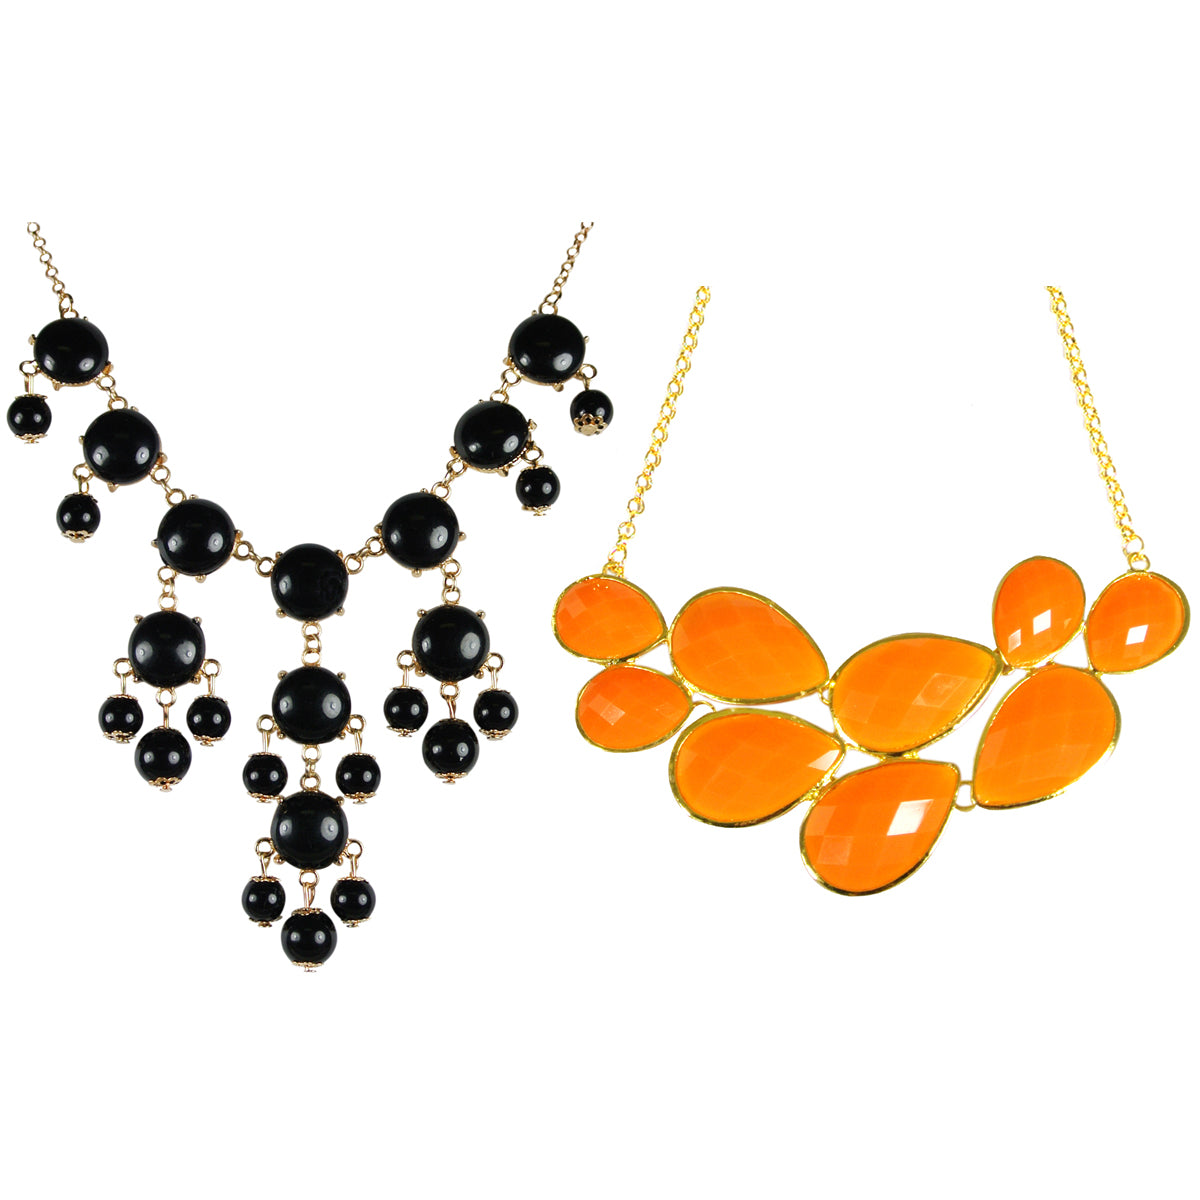 Black Mini Bubble Bib Statement Necklace + Orange Drop Shape Bubble Statement Necklaces [A64444,A64040]